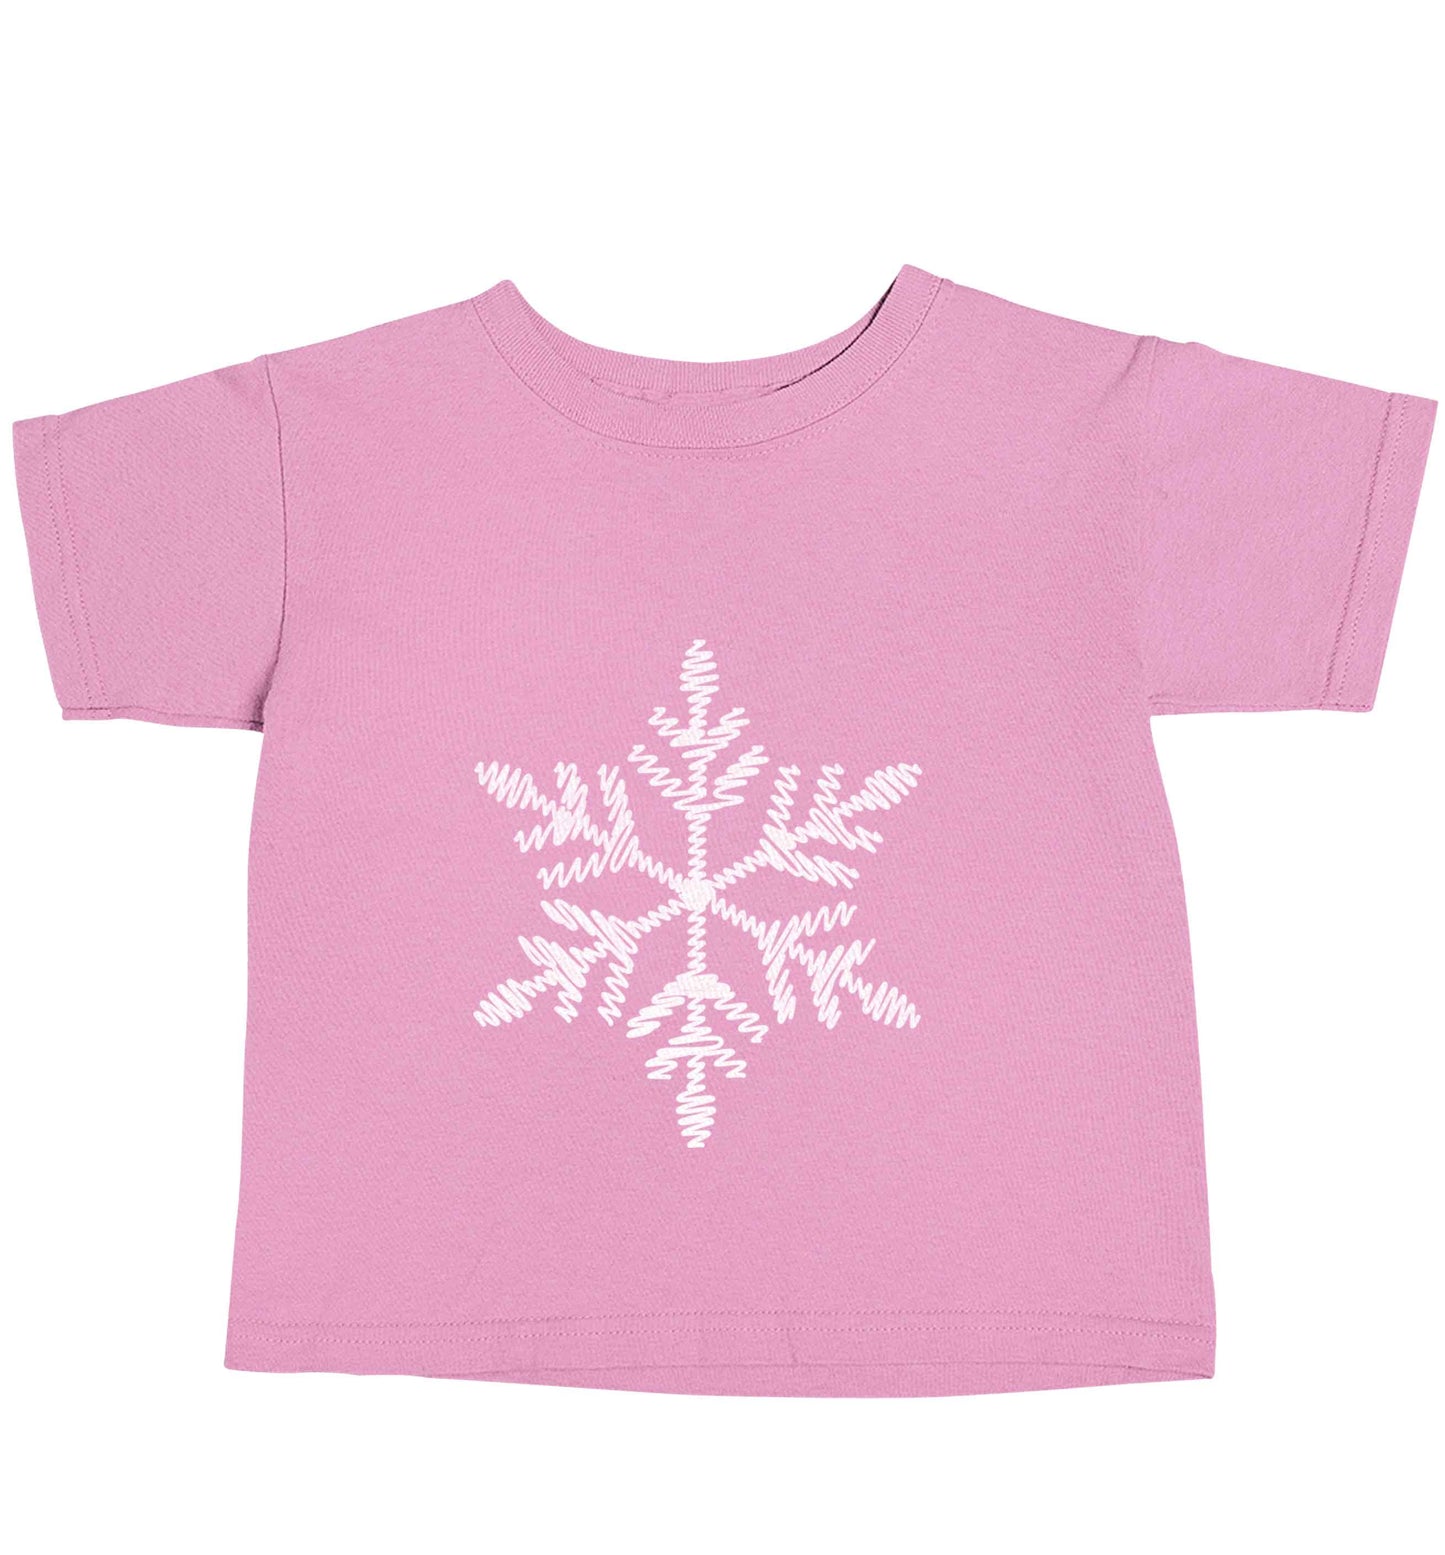 Snowflake light pink baby toddler Tshirt 2 Years